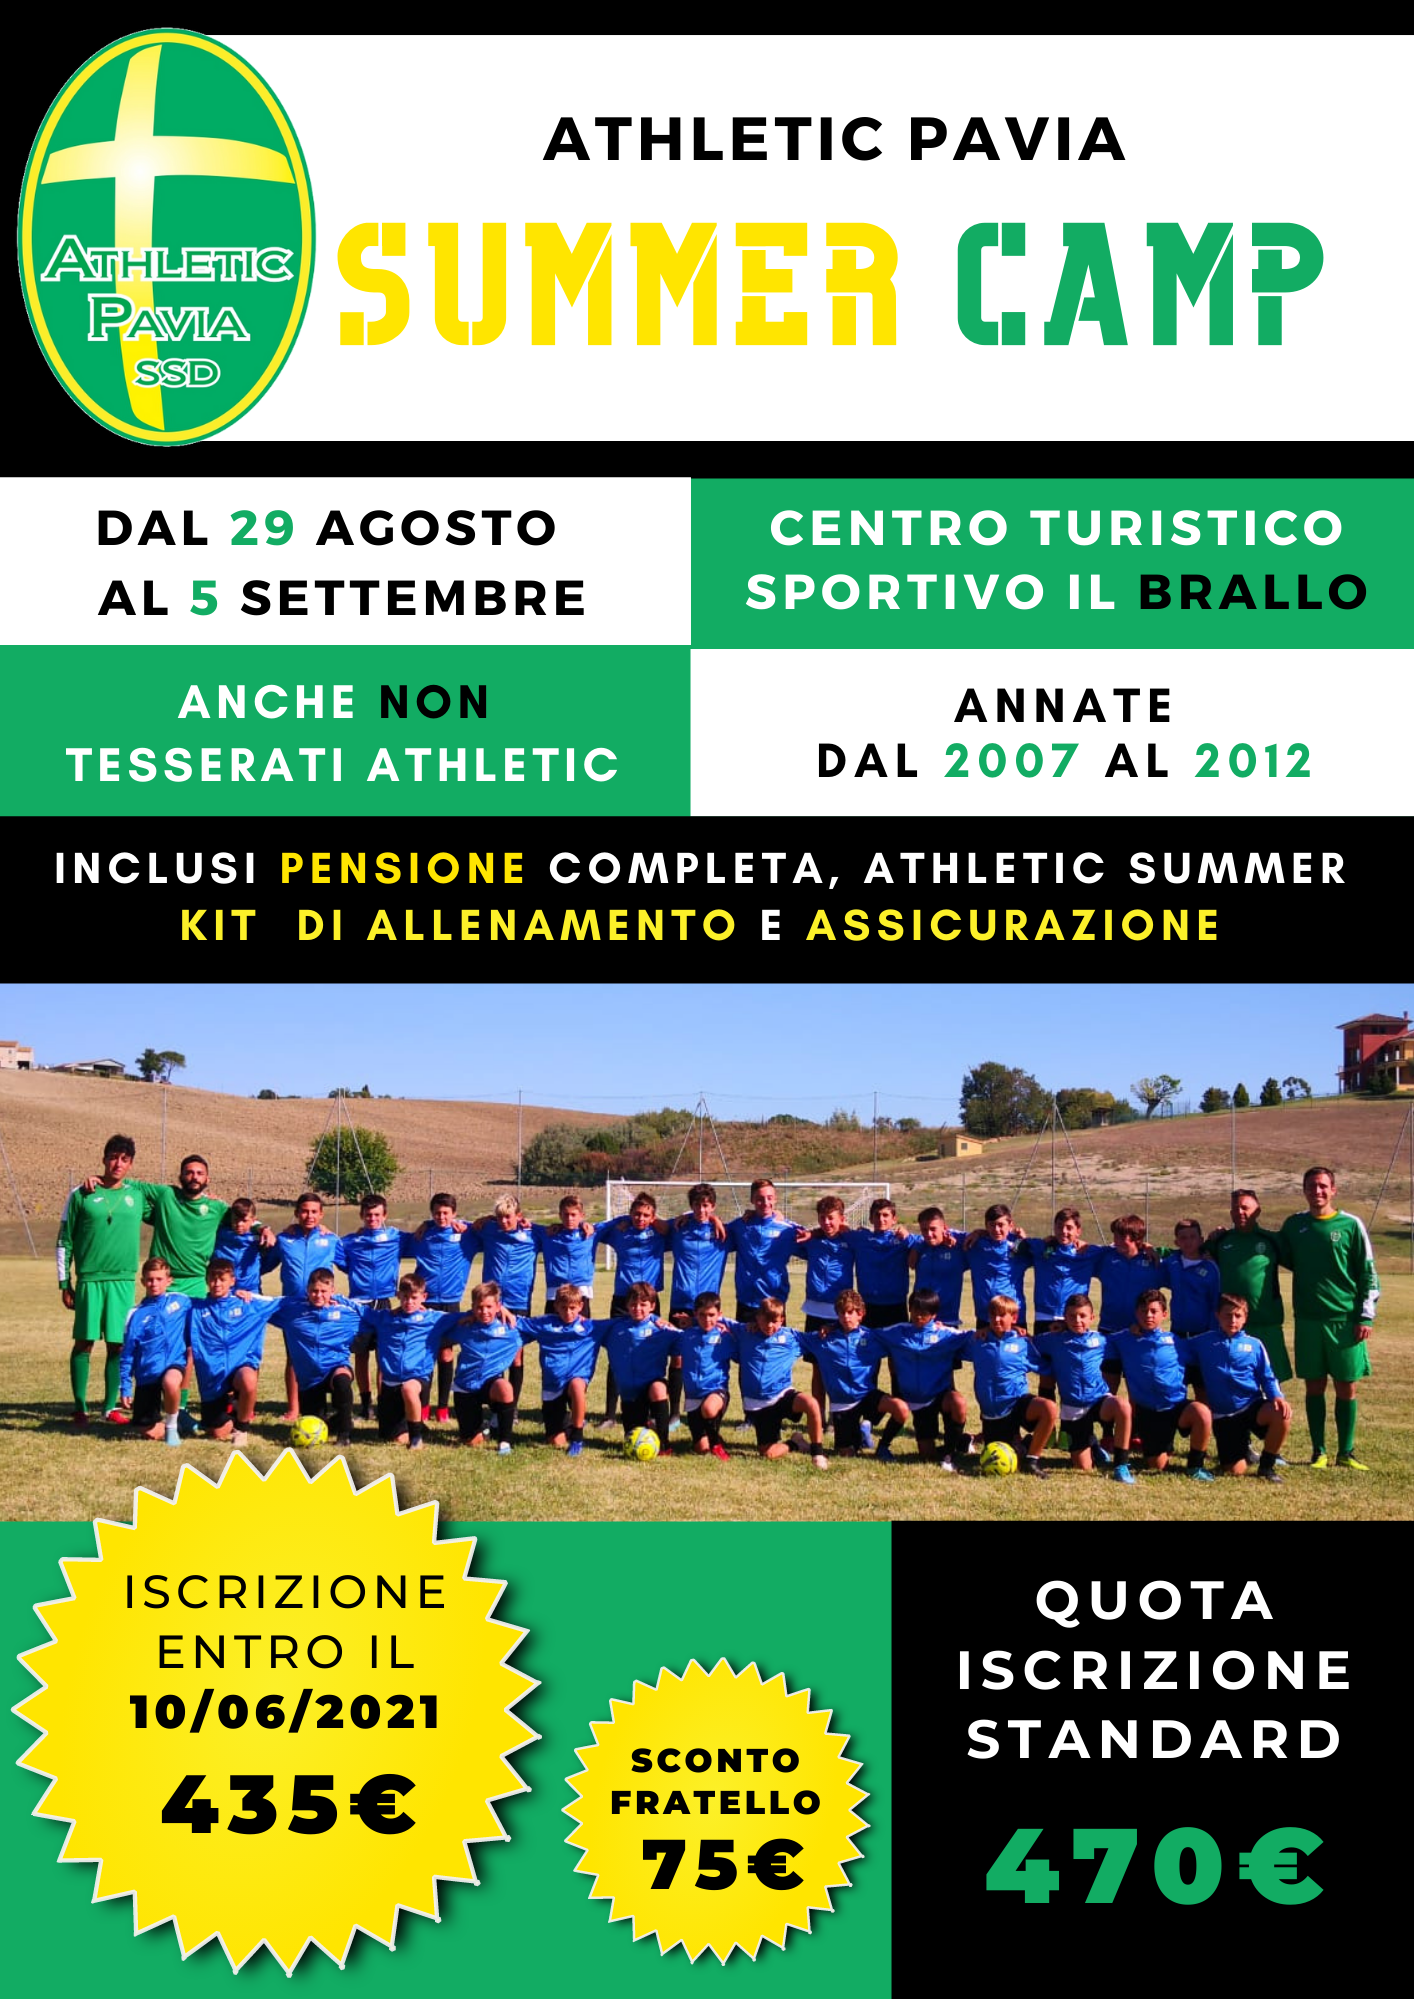 Athletic Pavia Summer Camp